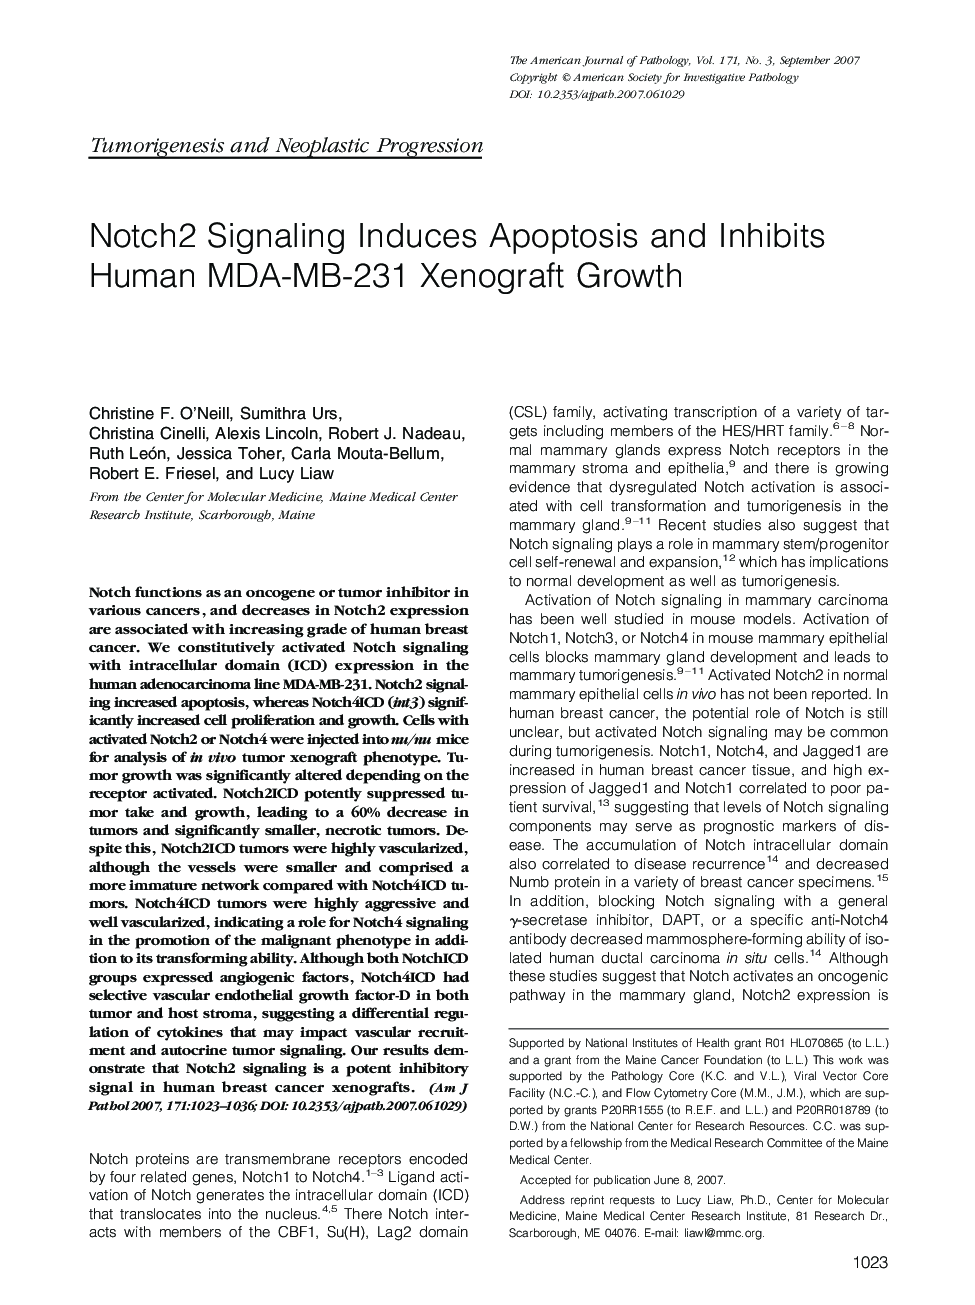 Notch2 Signaling Induces Apoptosis and Inhibits Human MDA-MB-231 Xenograft Growth